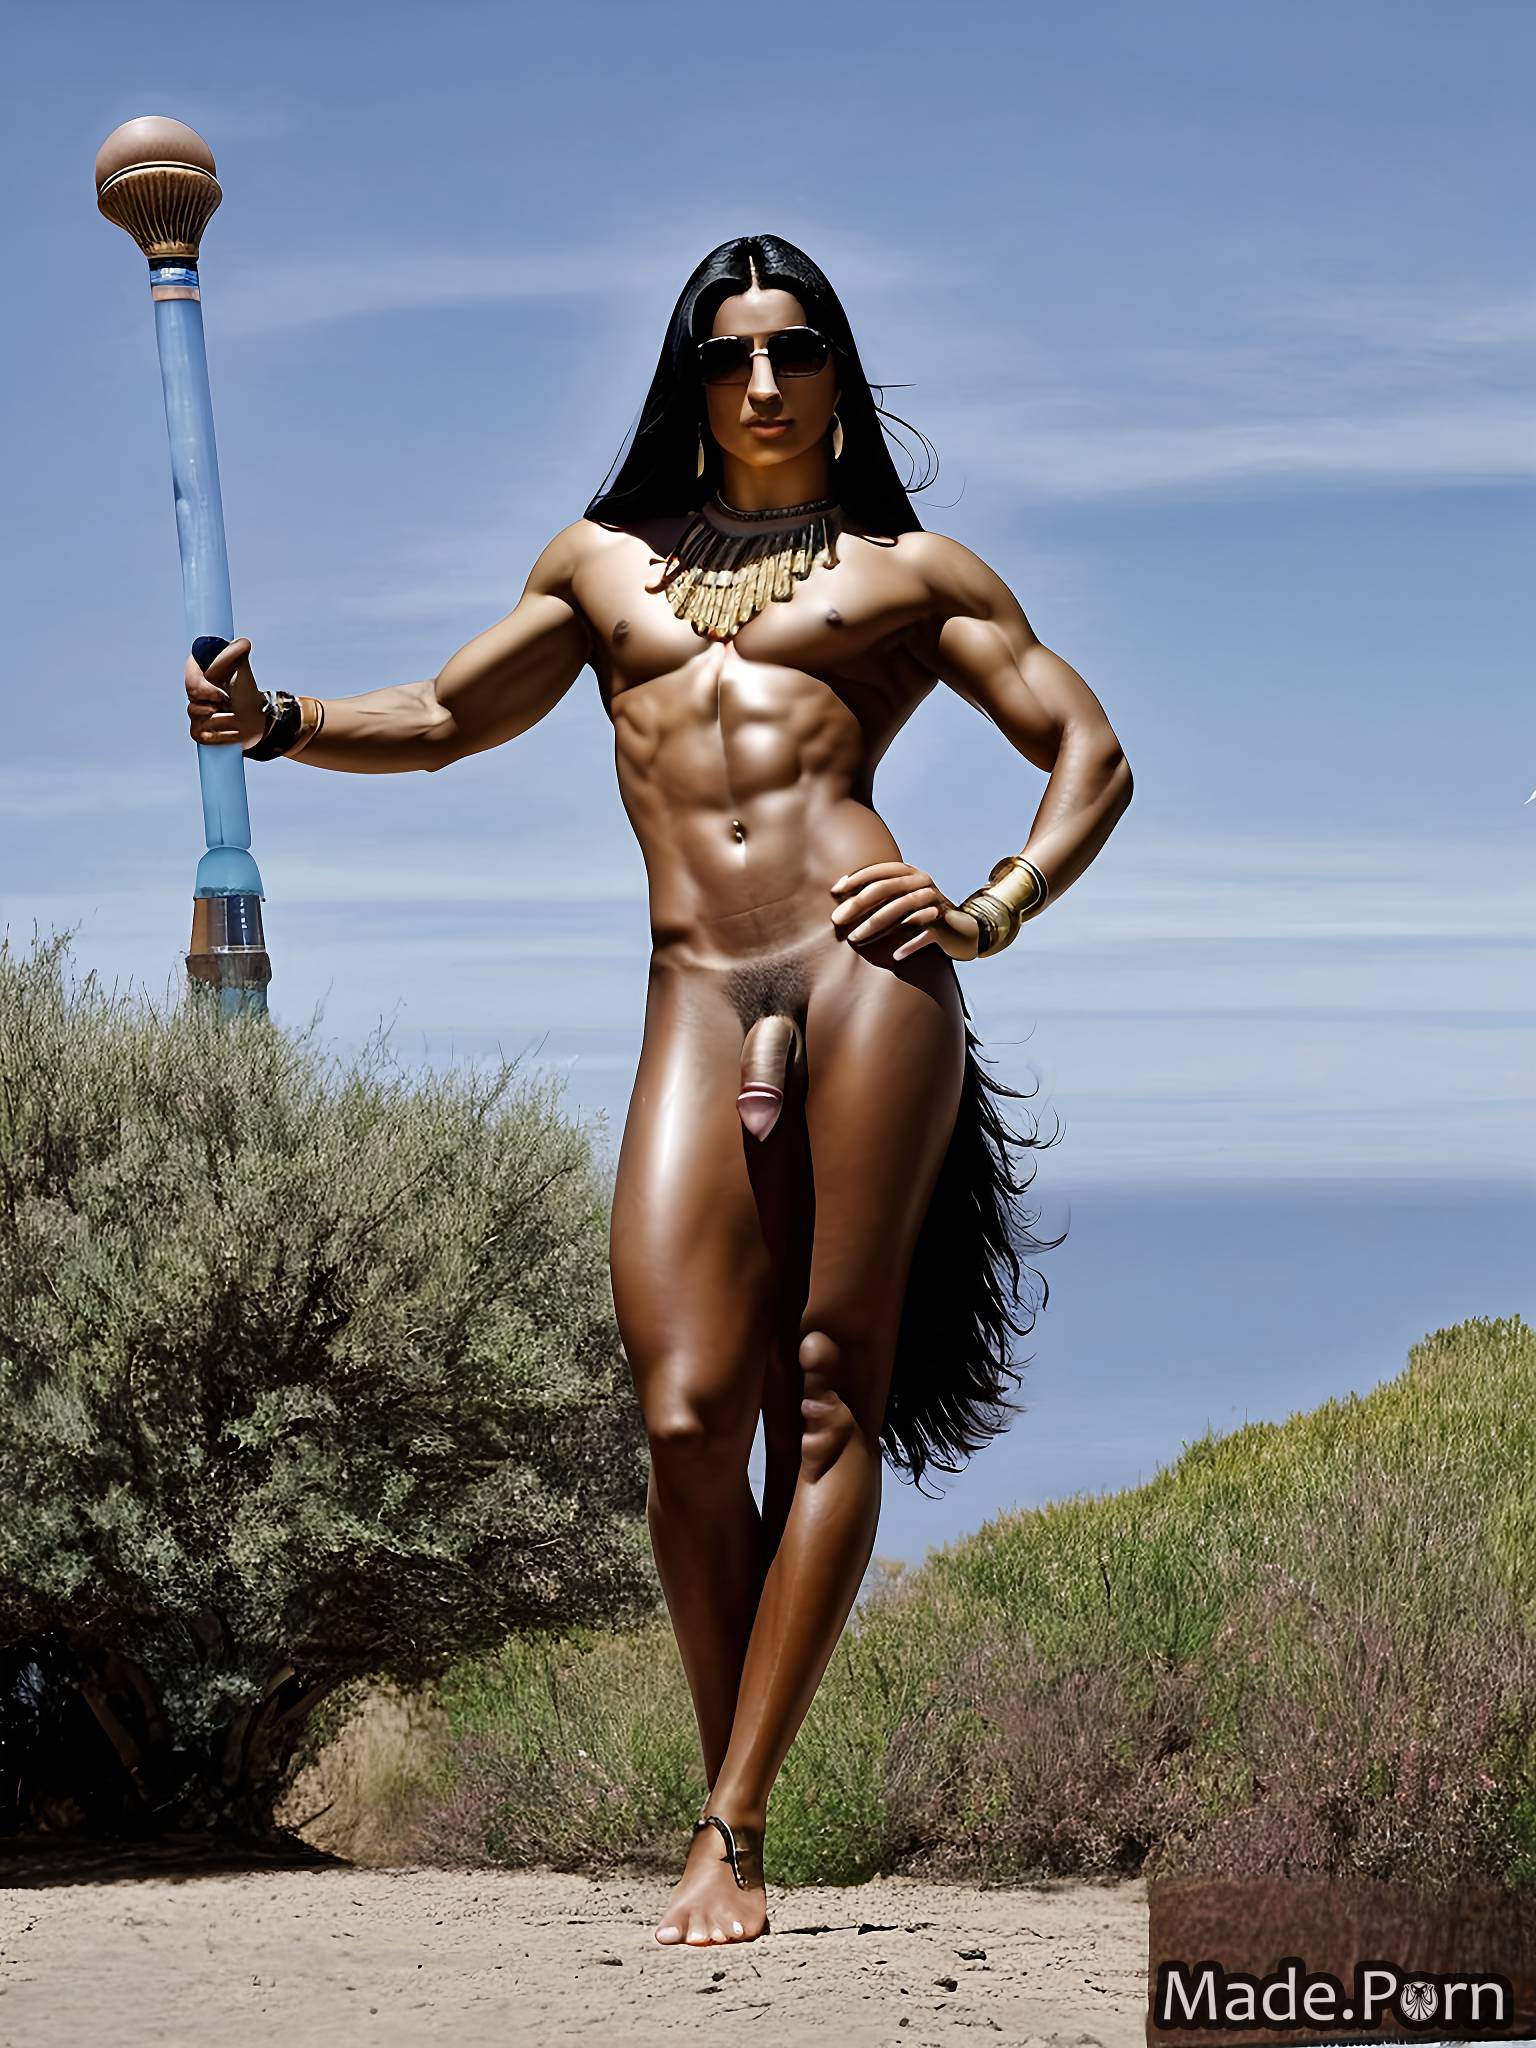 native american uncircumcised cock straight hair strip club athlete veiny dick big balls